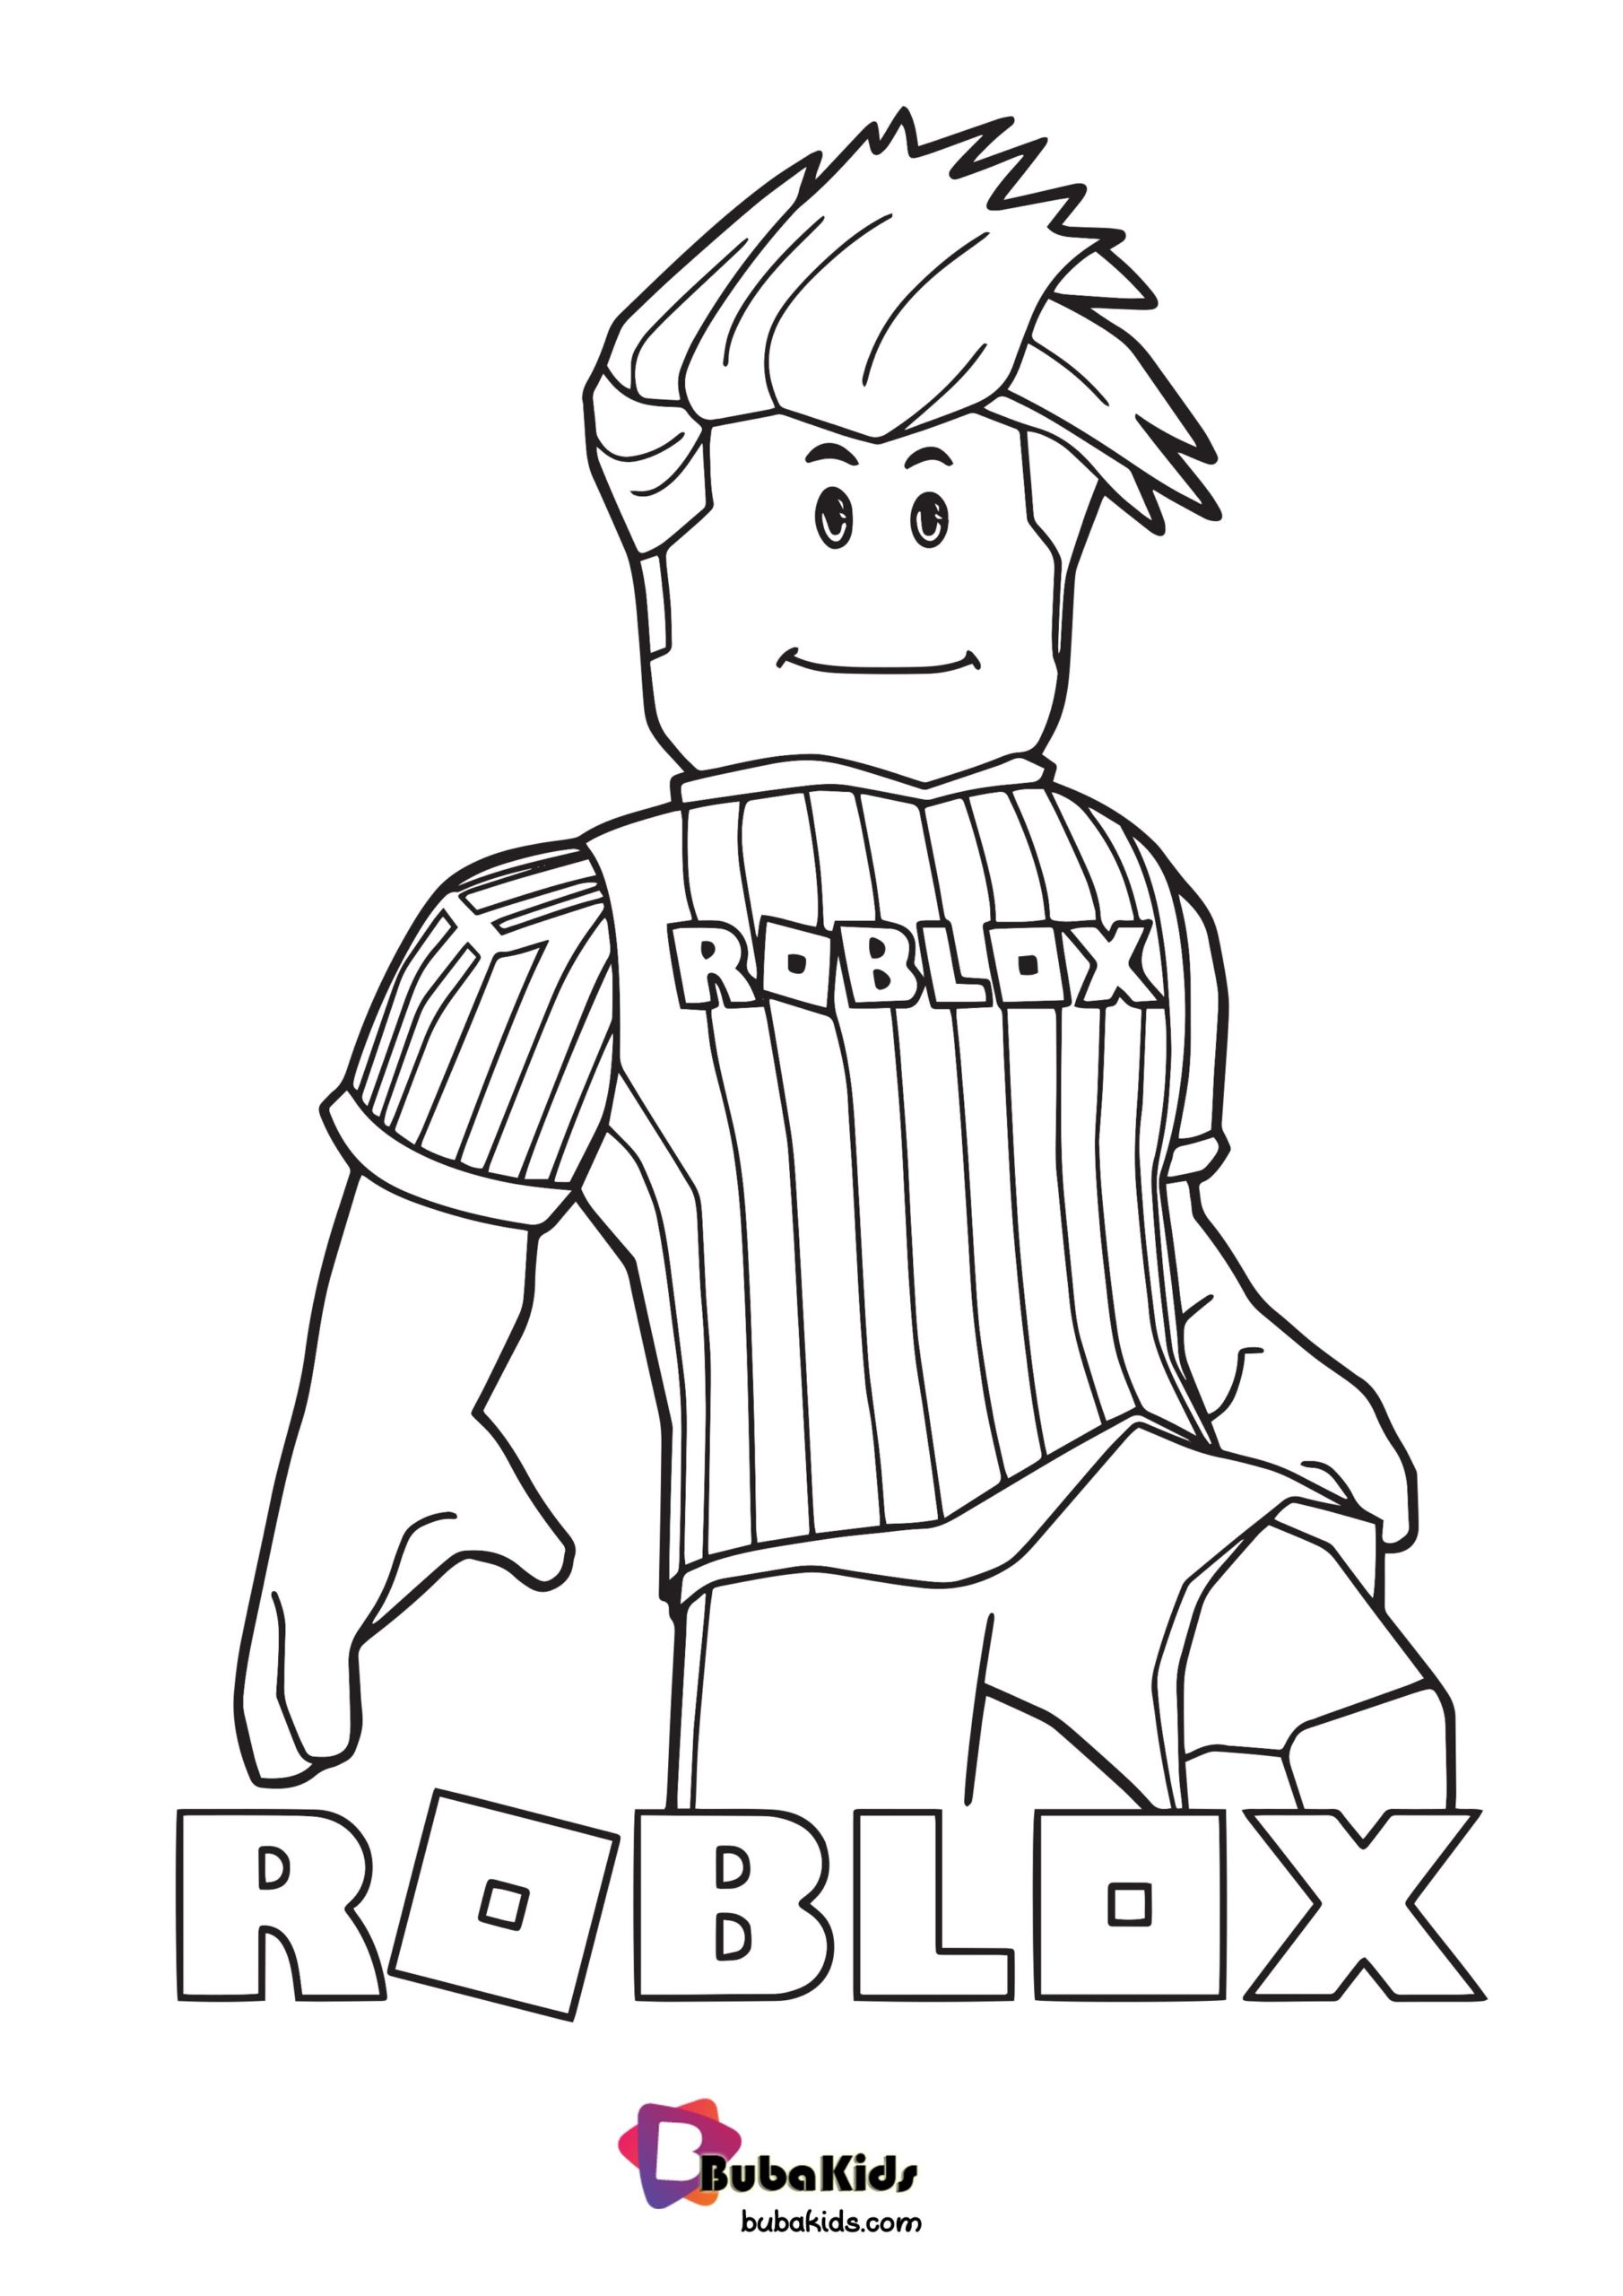 Roblox Coloring Page Footballer Wallpaper